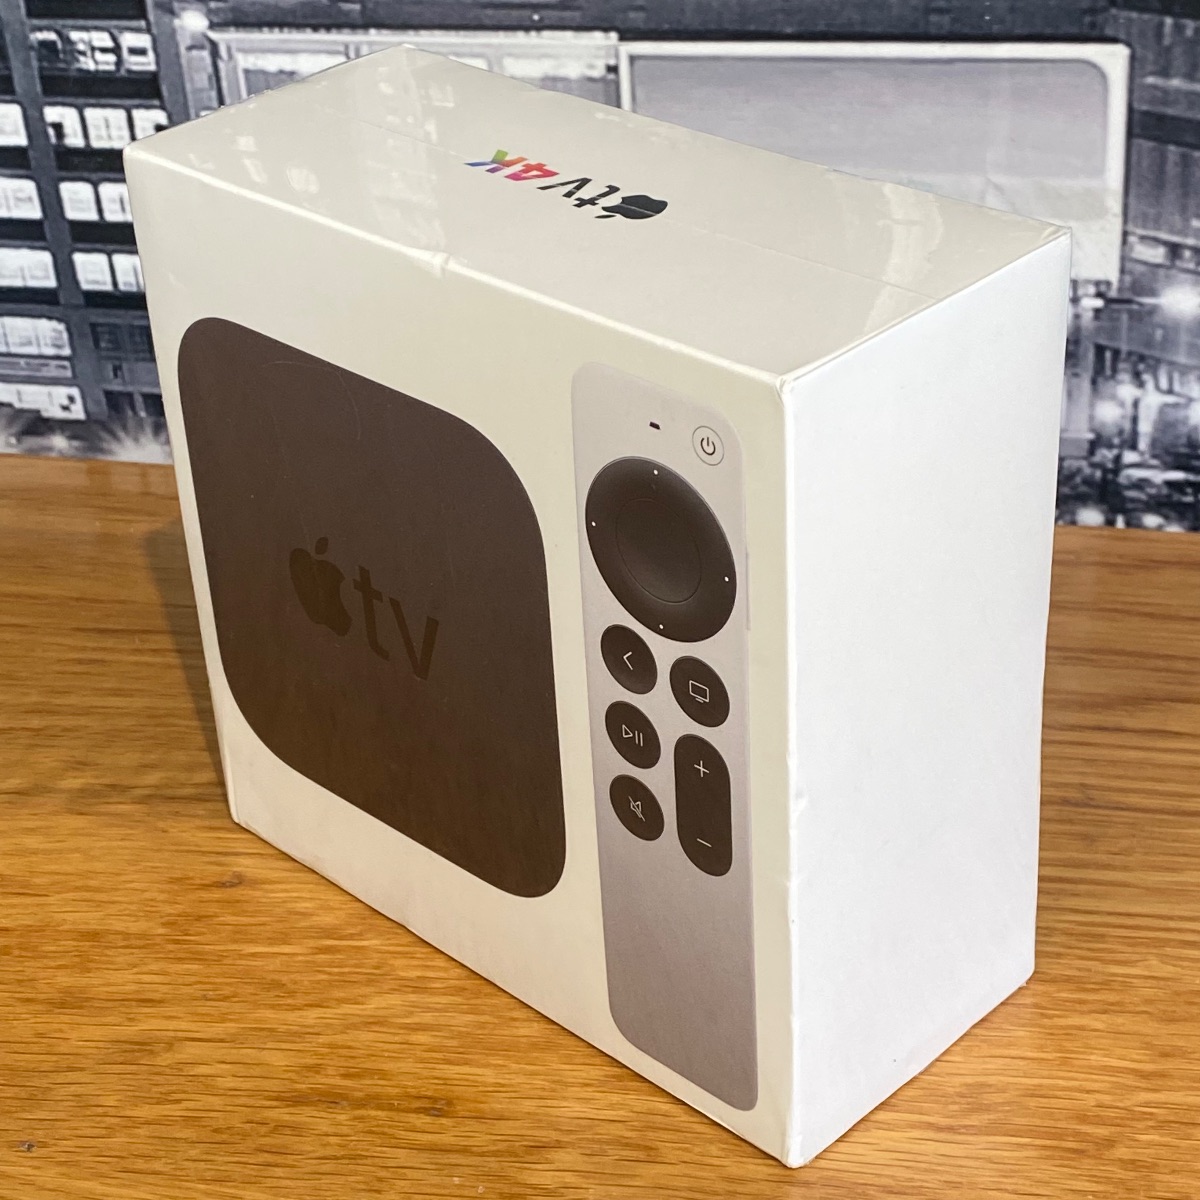 Apple TV 4K Smart Box 32GB WiFi Netflix BBC iPlayer Siri Remote Sealed Genuine MXGY2BA 0190199532595 (Brand New)